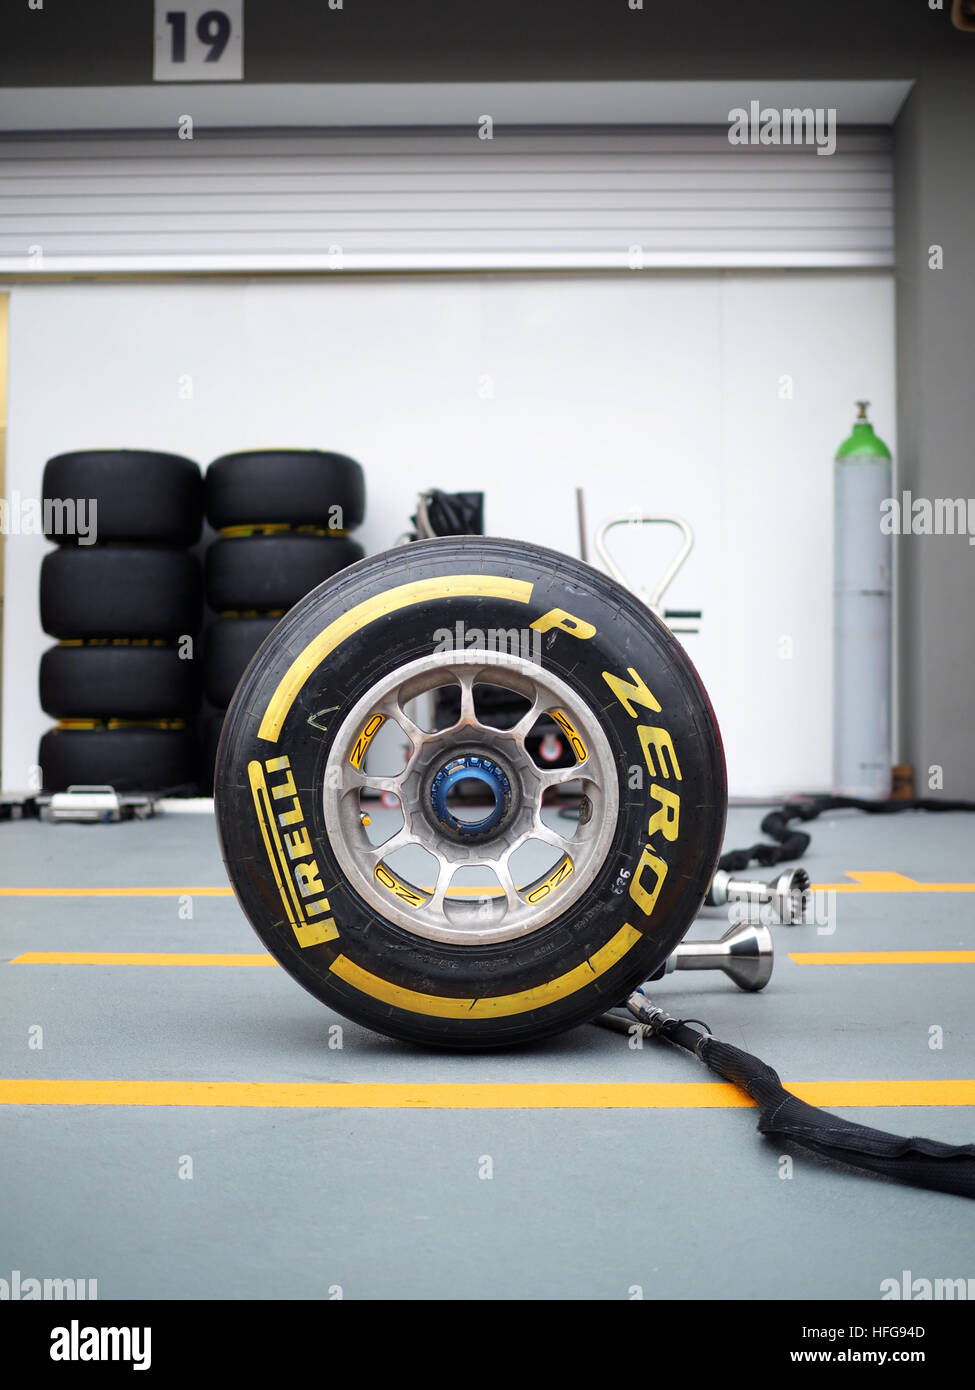 Formula One F1 grand prix racing motor sport P Zero tires wheels gold  Pirelli yellow stripe Stock Photo - Alamy